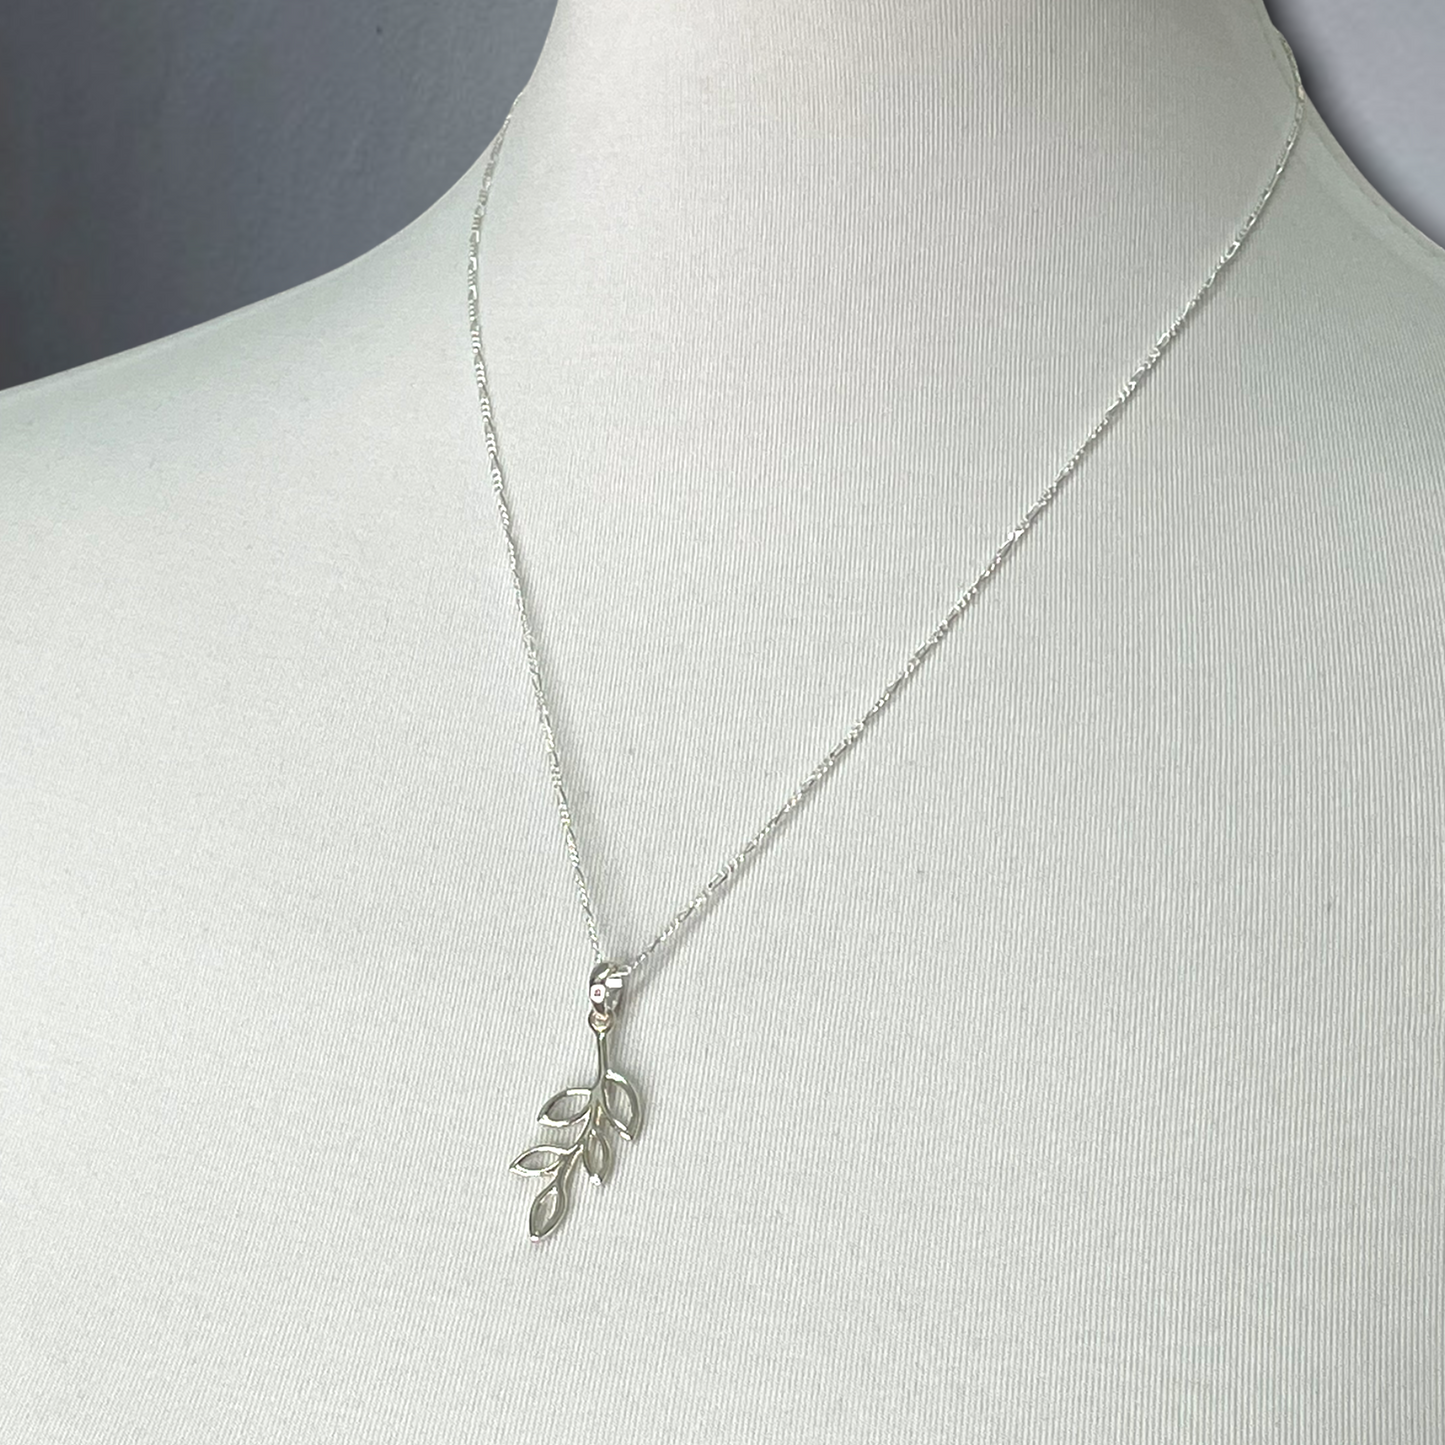 Liście w Ast 925 Sterling Silver Chain - Real Silver Minimalist Nature Biżuteria - K925-17